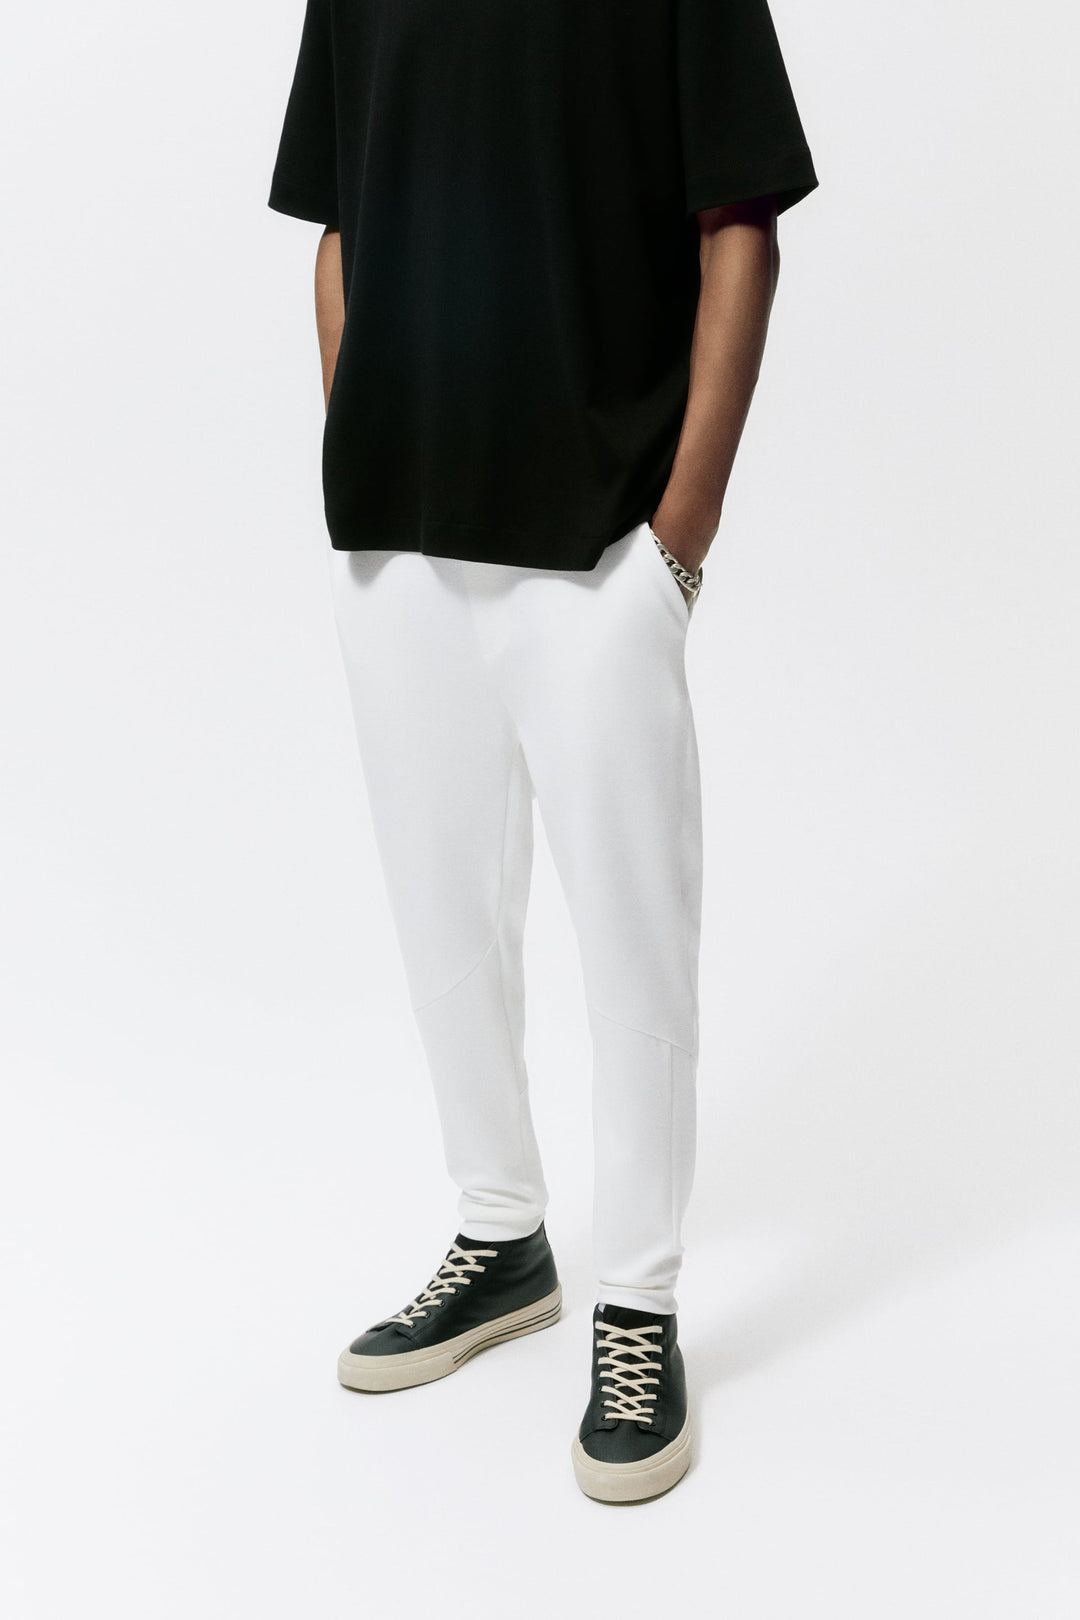 ZaraMan Knitted Jogg Polyester Mix Trouser 4087/325/251